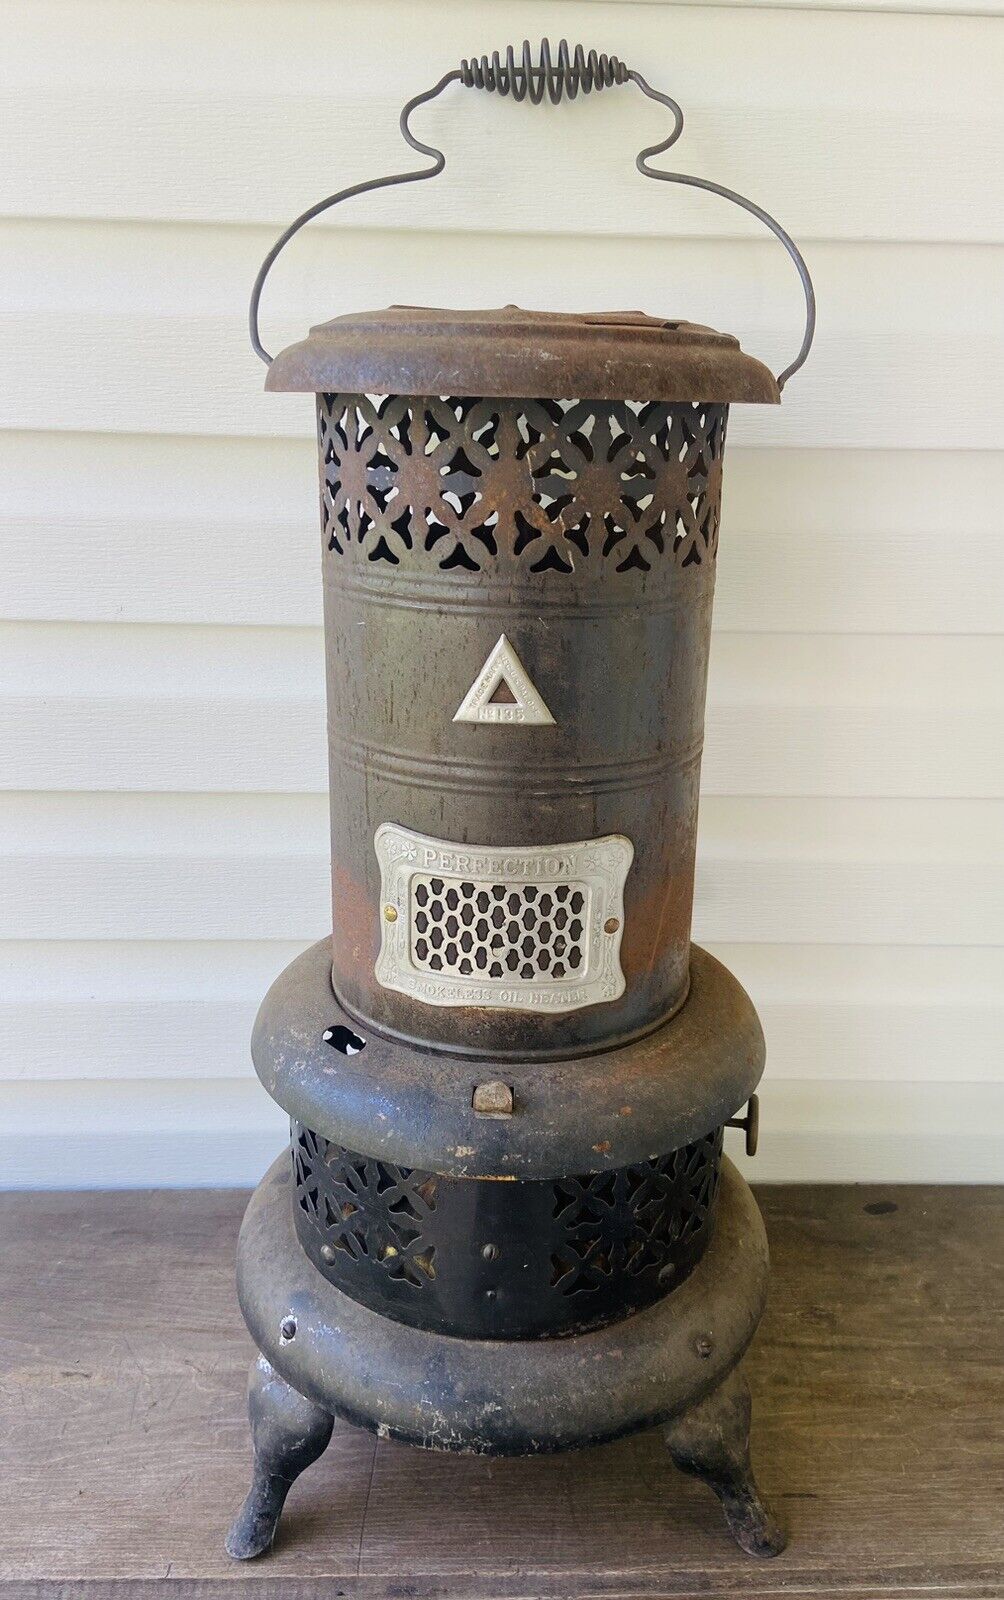 VTG Antique Perfection Oil Kerosene Parlor Cabin Heater Stove #135 Brass Tank